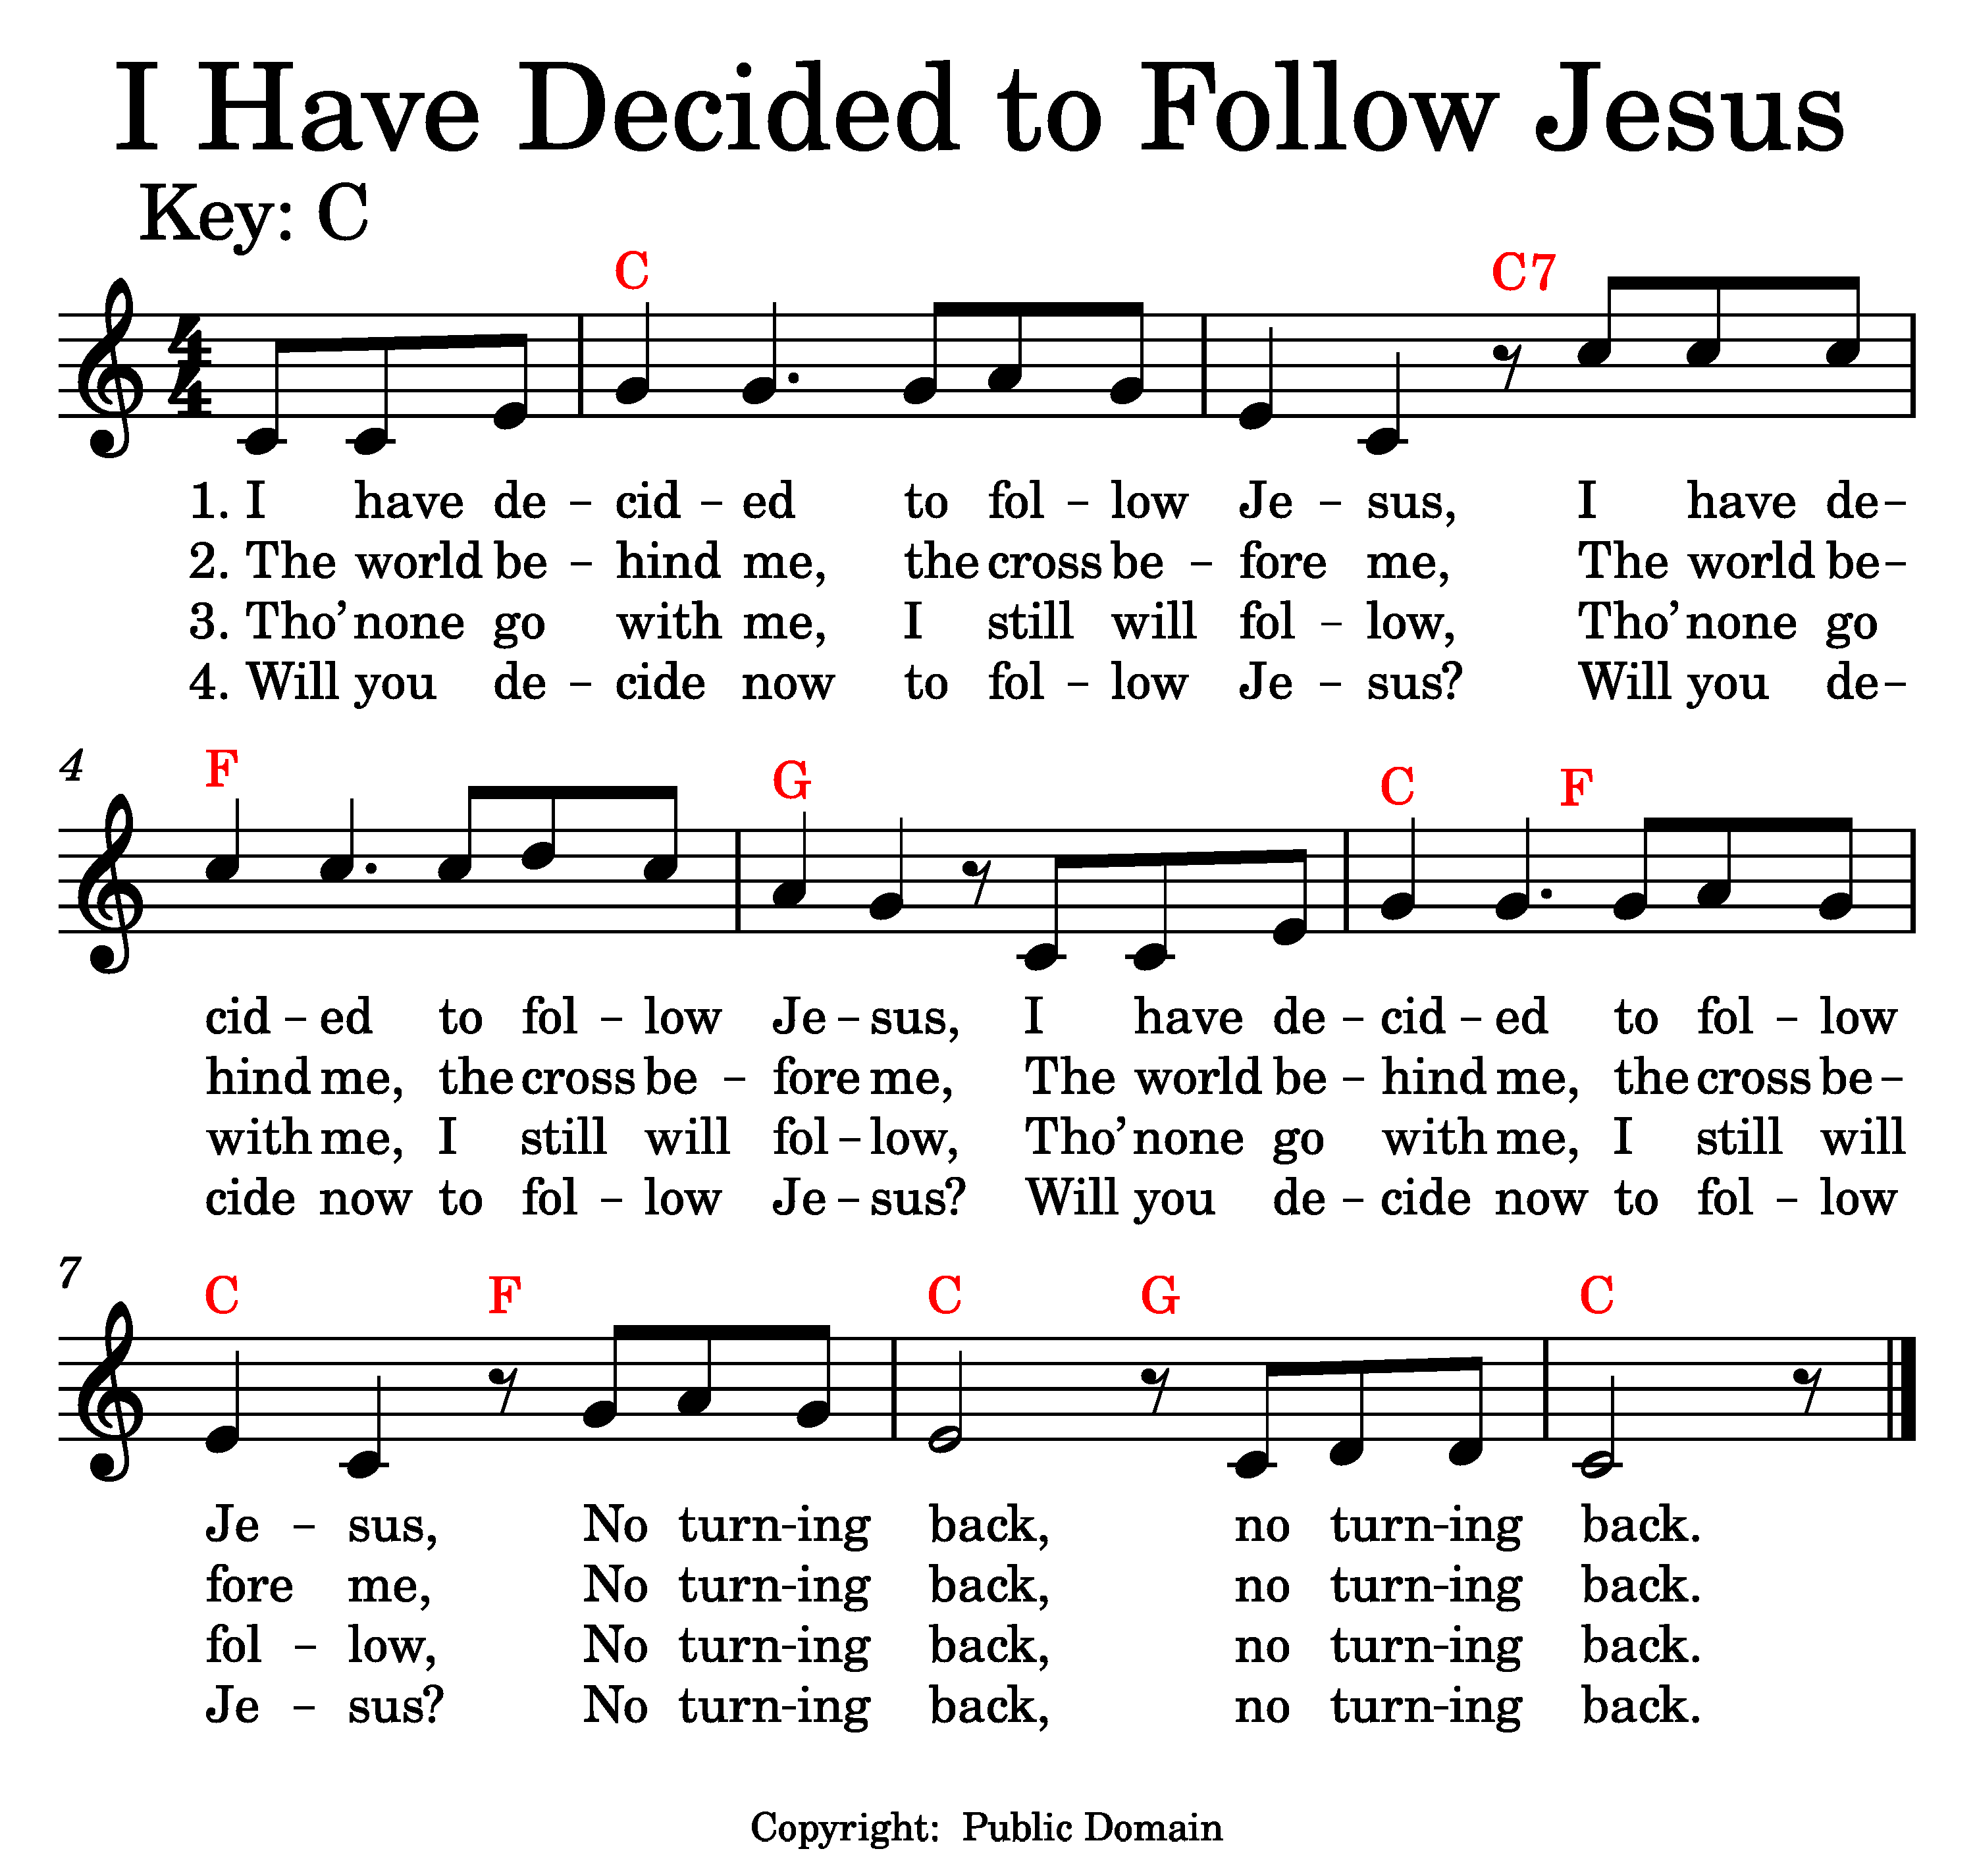 I Have Decided to Follow Jesus music and lyrics.